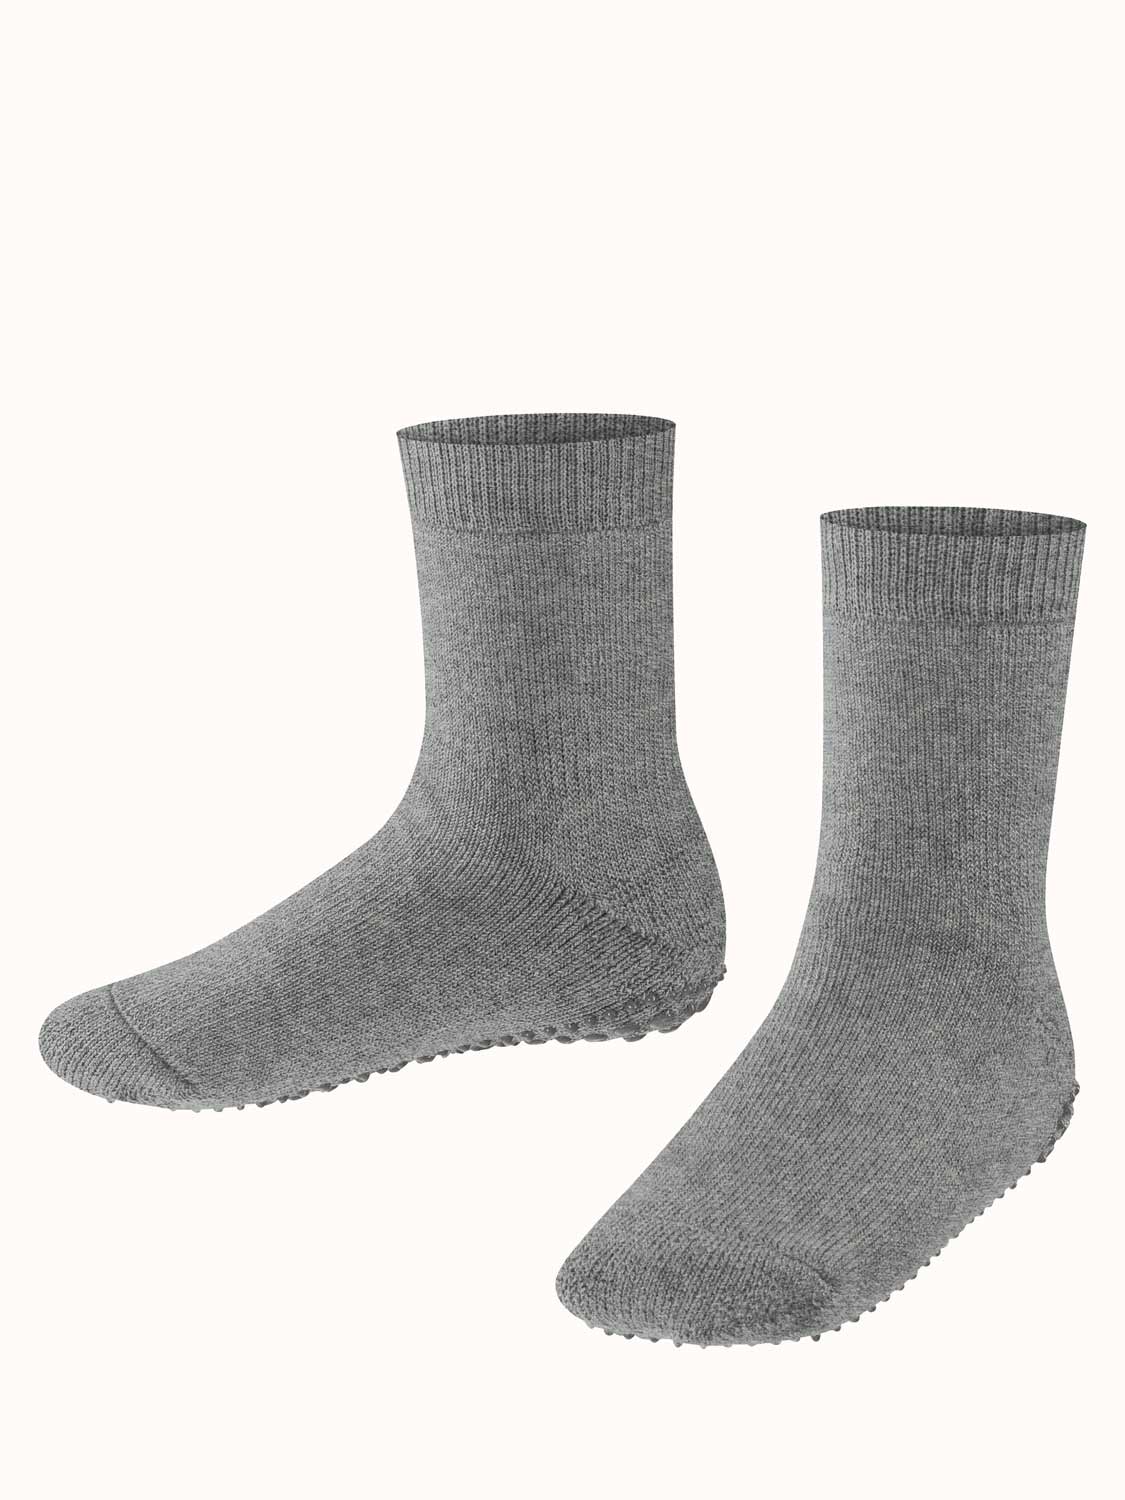 Catspads Kids Merino Slipper Socks | Products | Superlove